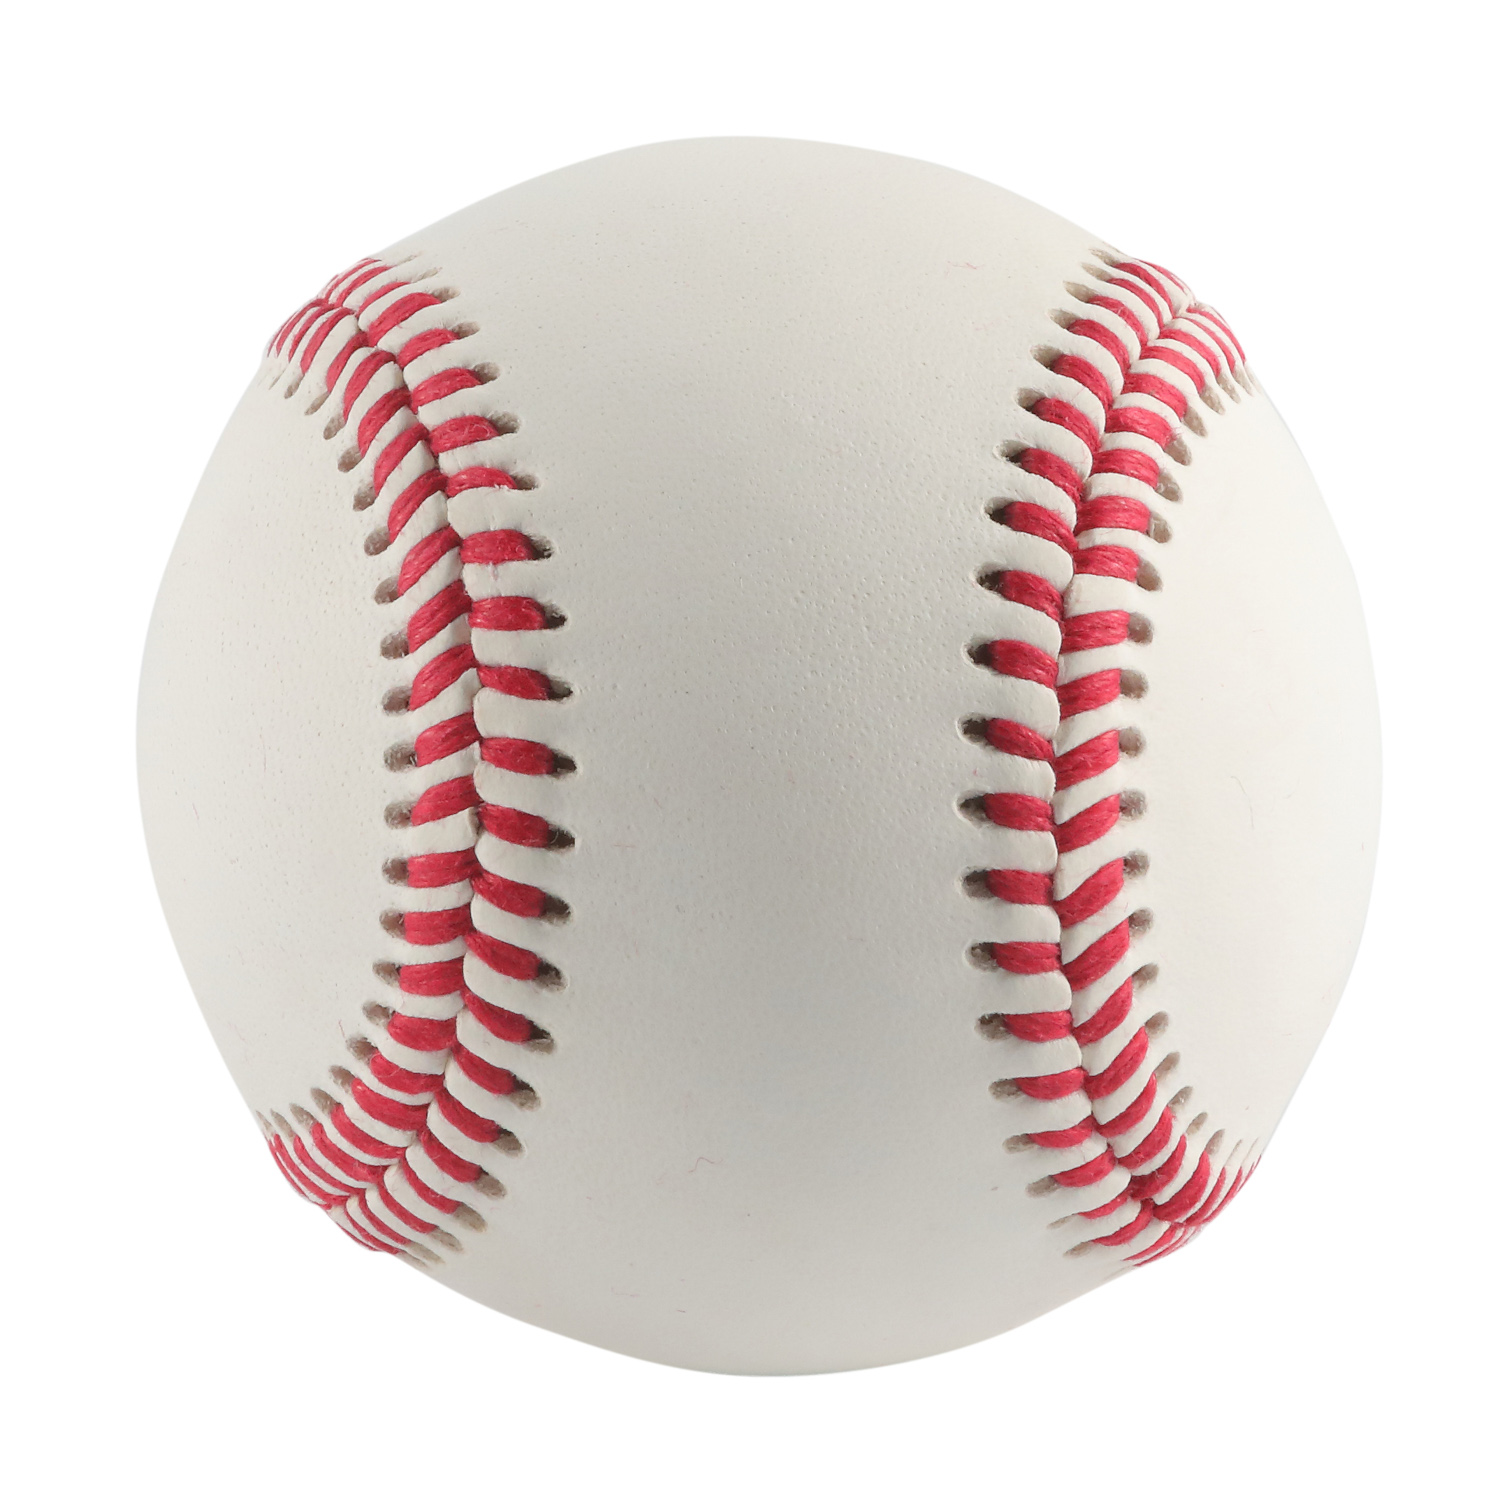 Hochwertiger Red Pill-Baseball aus Rindsleder mit doppelt gepolstertem Kern